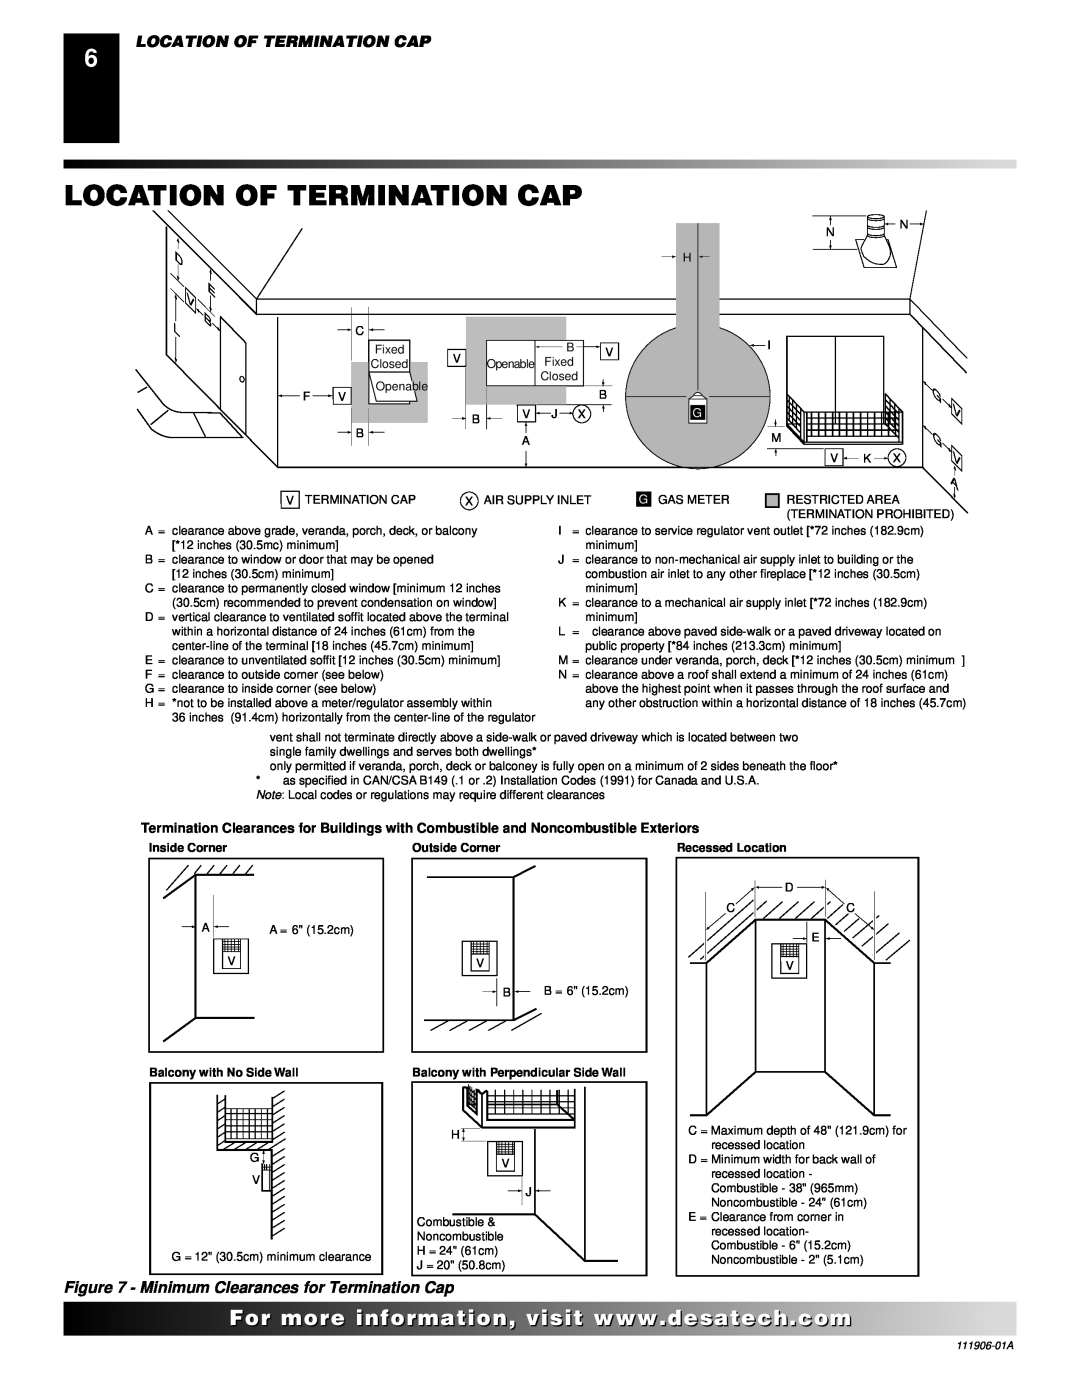 Desa (V)V42NA(1) Location Of Termination Cap, D E B L, V G V A, Minimum Clearances for Termination Cap, Inside Corner 